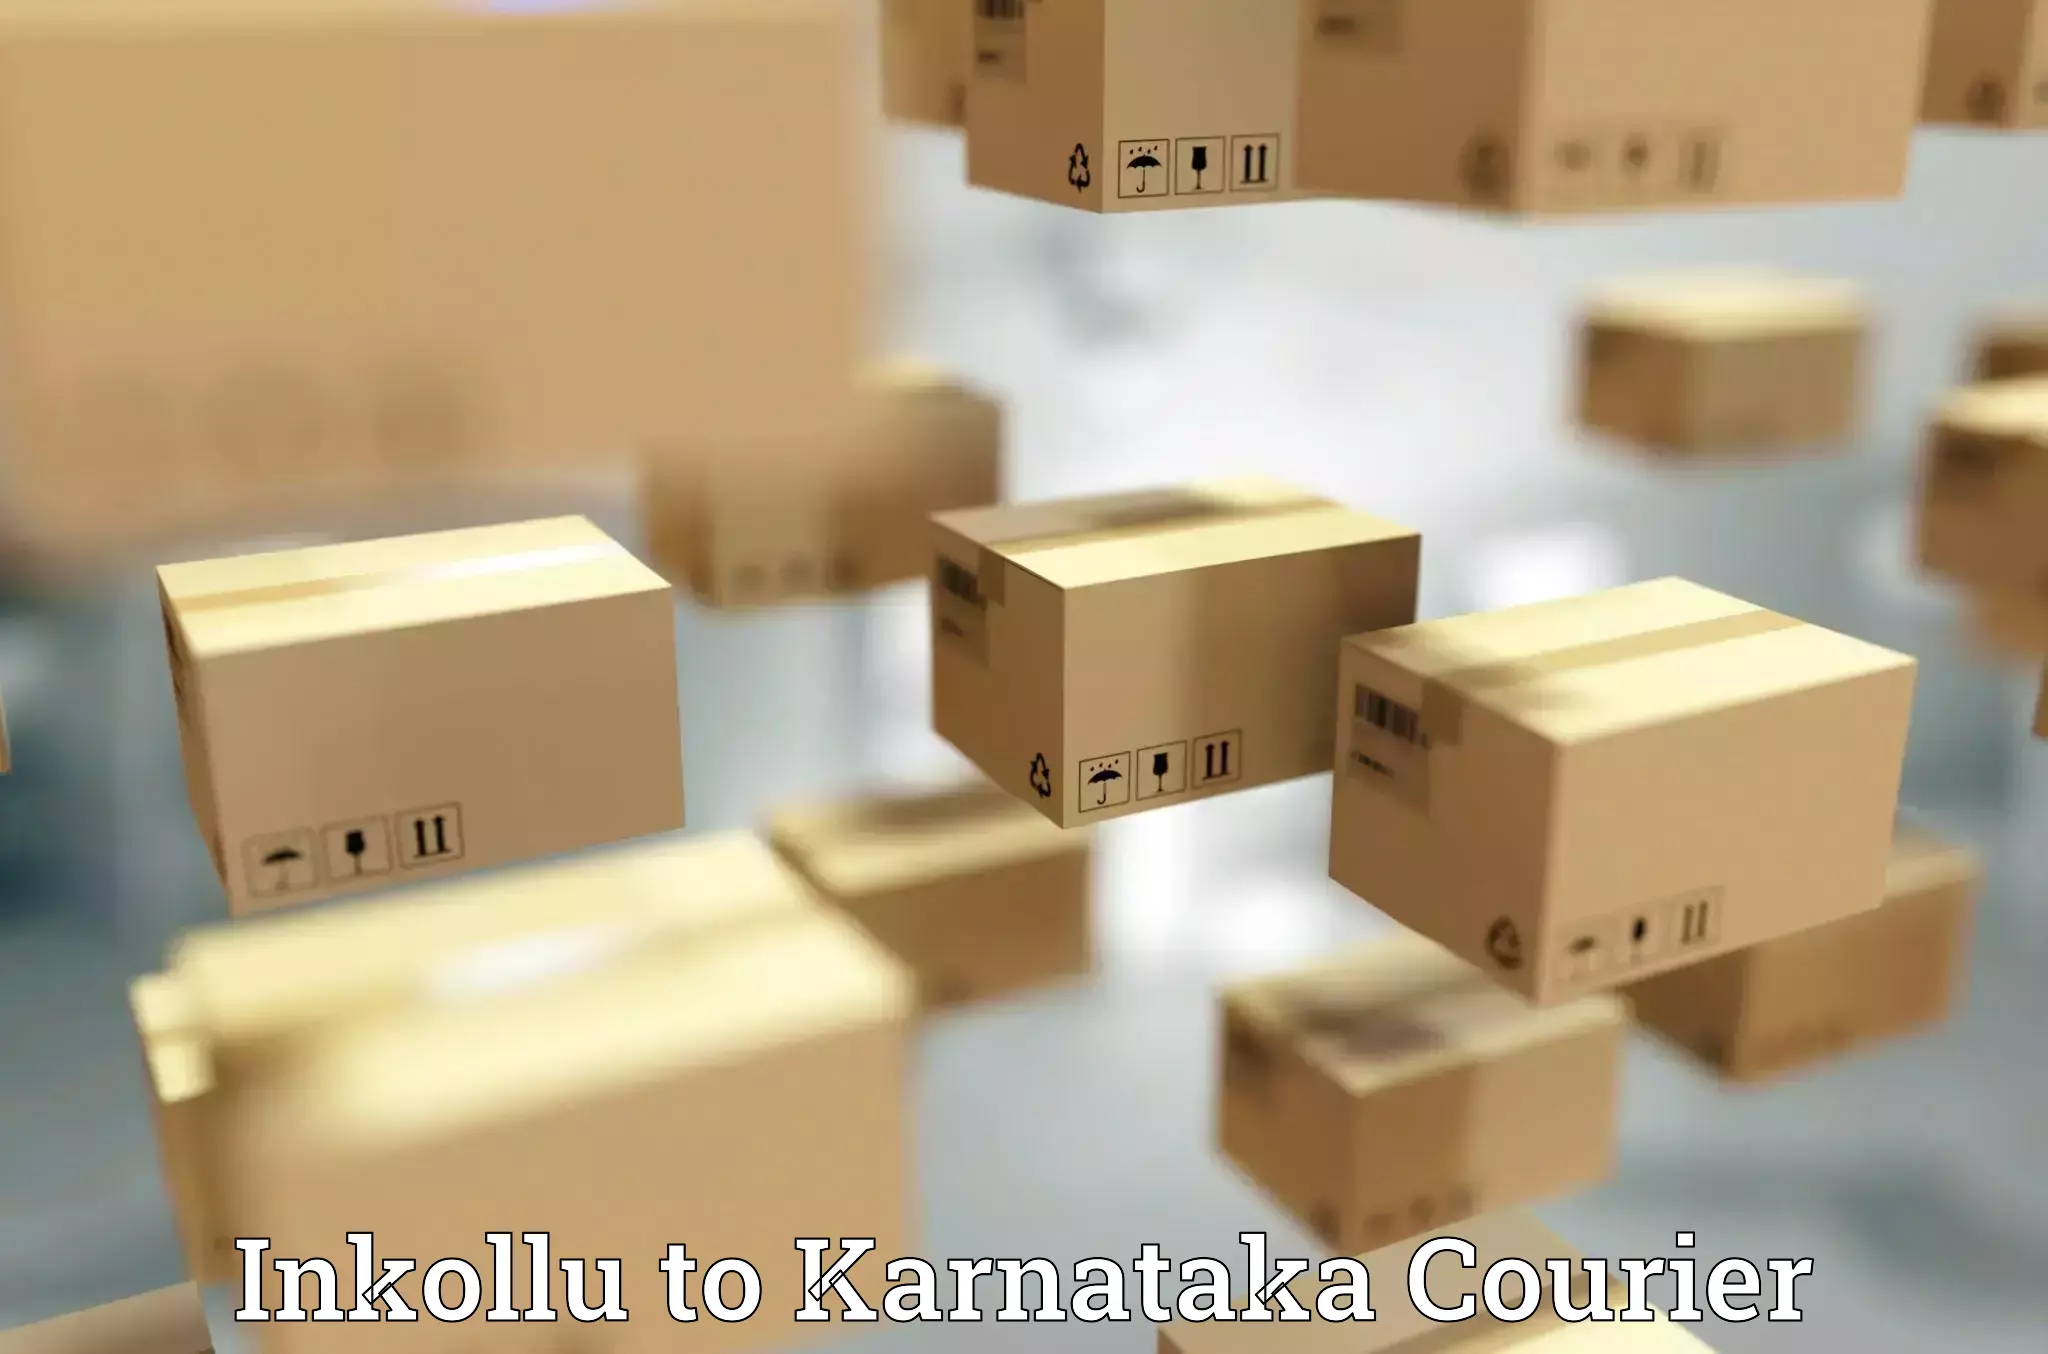 Package delivery network Inkollu to Karnataka